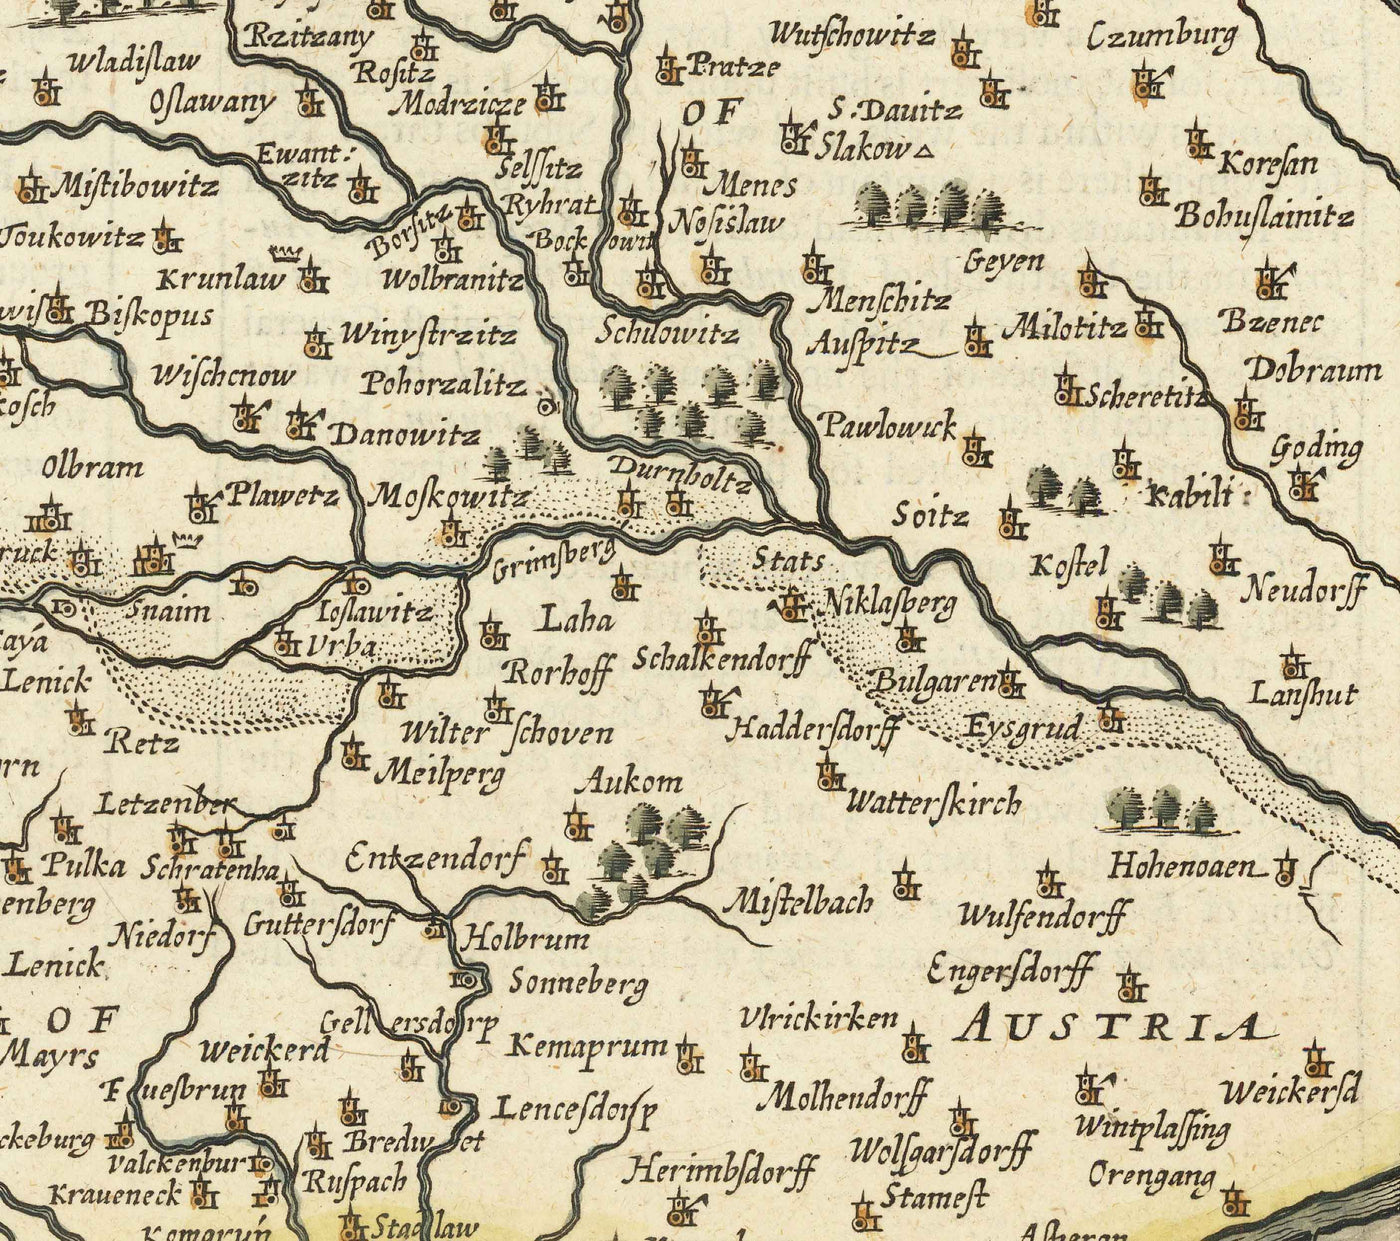 Old Map of Bohemia in 1626 by John Speed - Czechia, Prague, Bavaria, Moravia, Central Europe